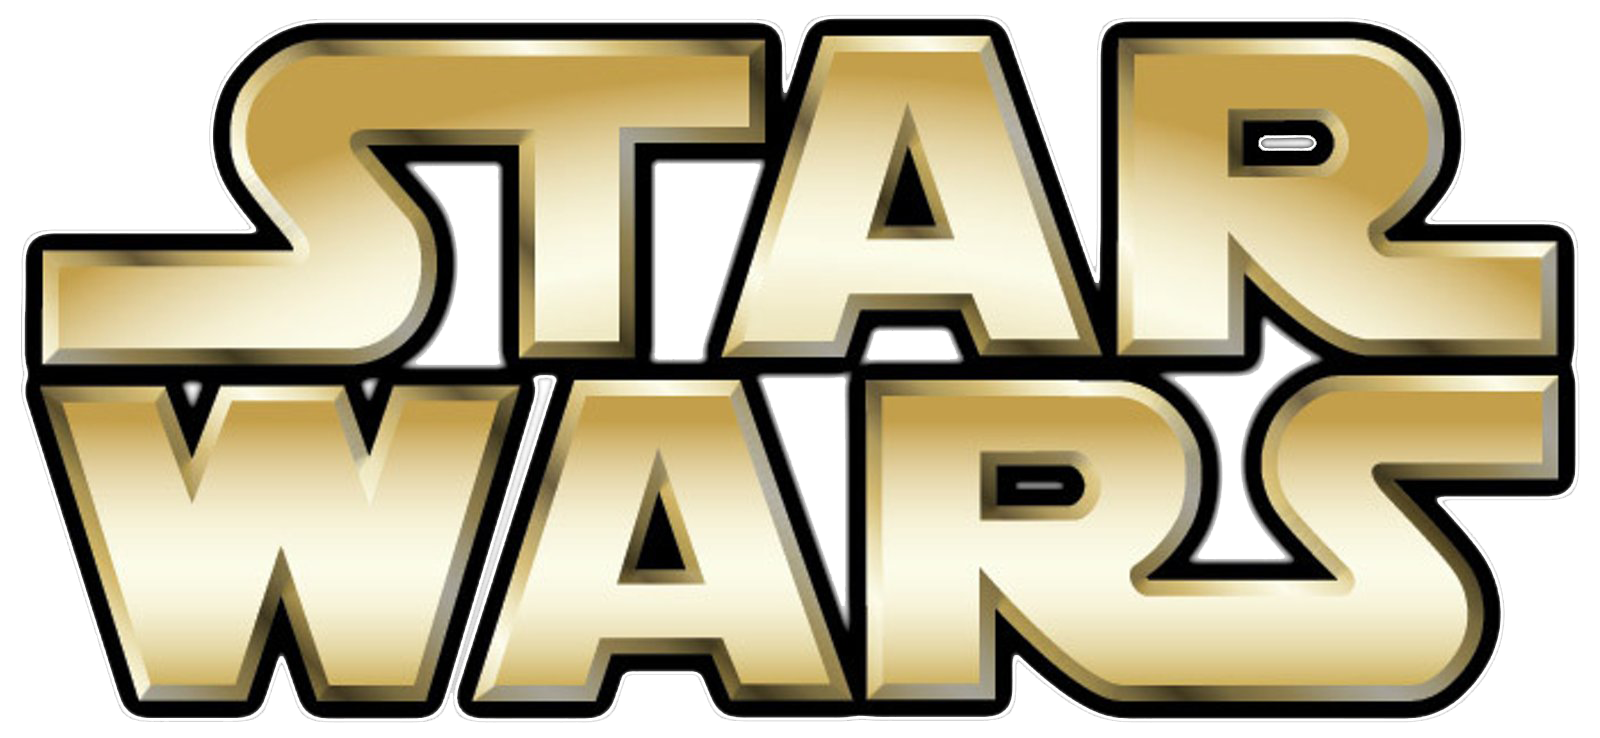 Star Wars Logo Png File - Starwars, Transparent background PNG HD thumbnail